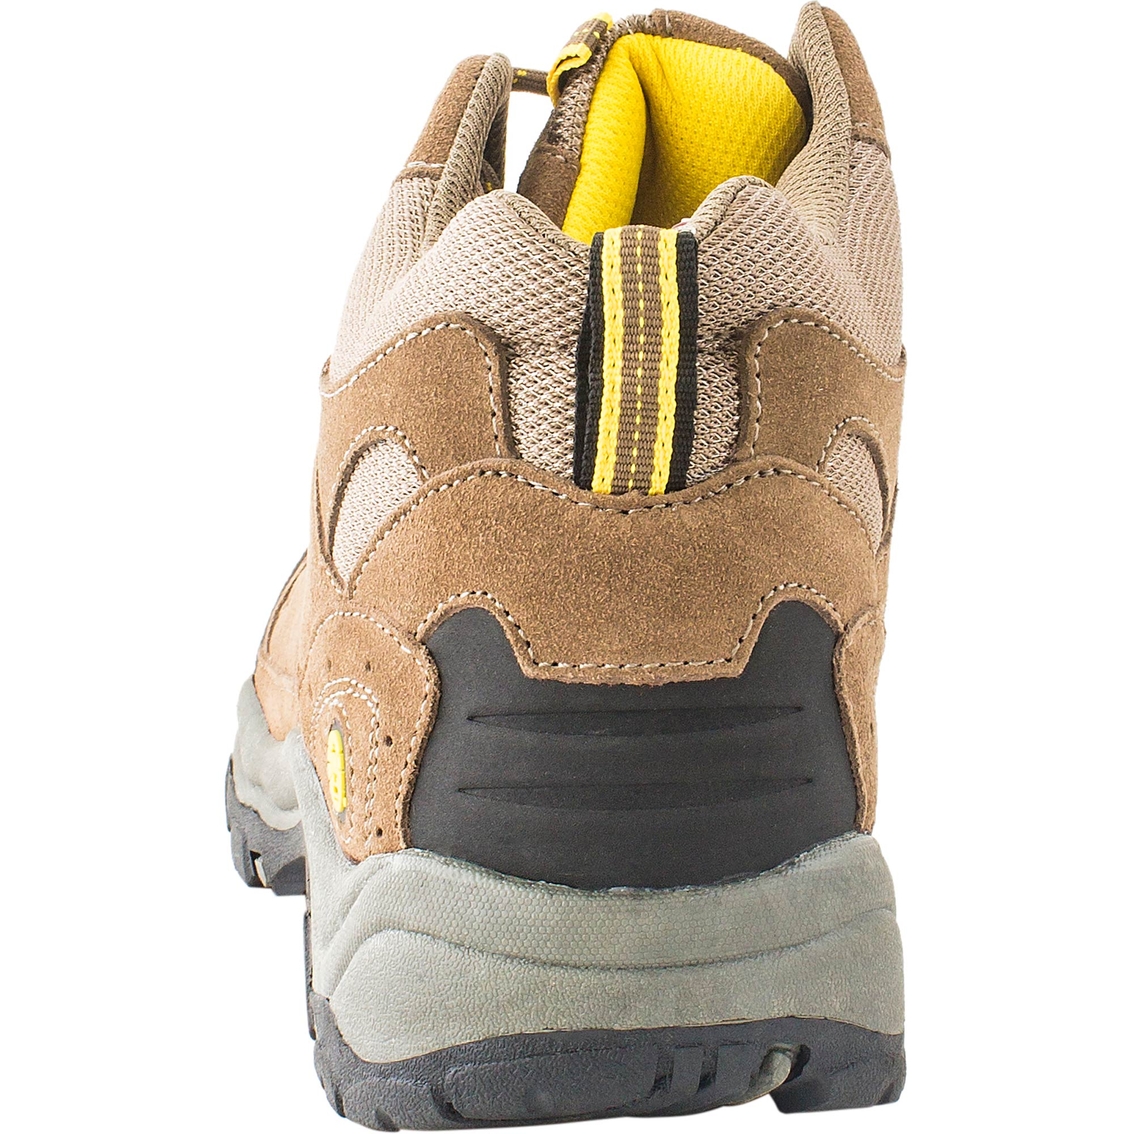 Coleman Men's Xcavate Hiker Shoes - Image 3 of 3